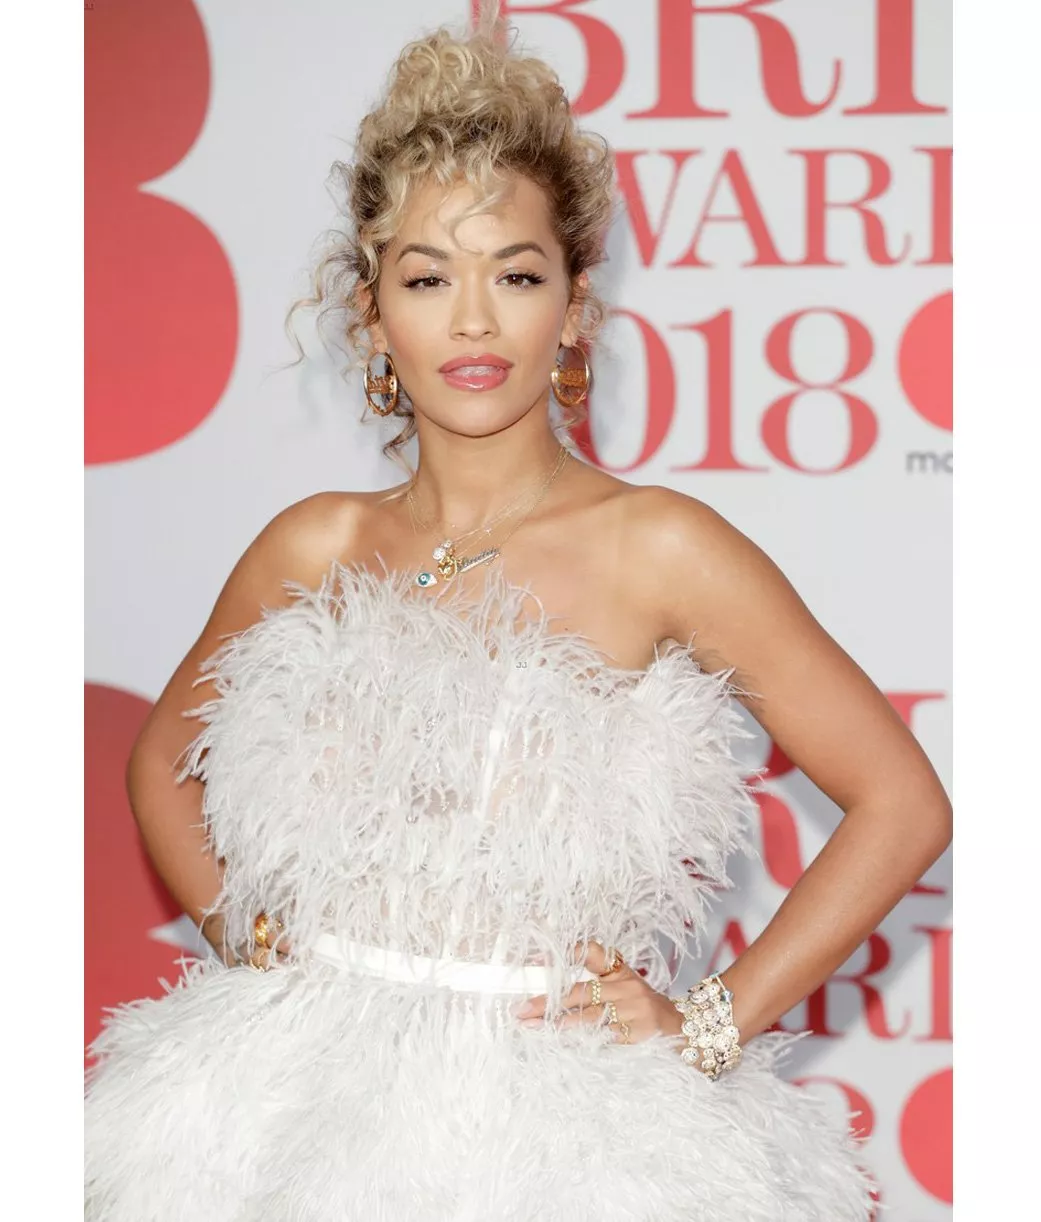 Rita Ora خلال حفل Brit Awards 2018: إطلالة شبيهة بالعرائس